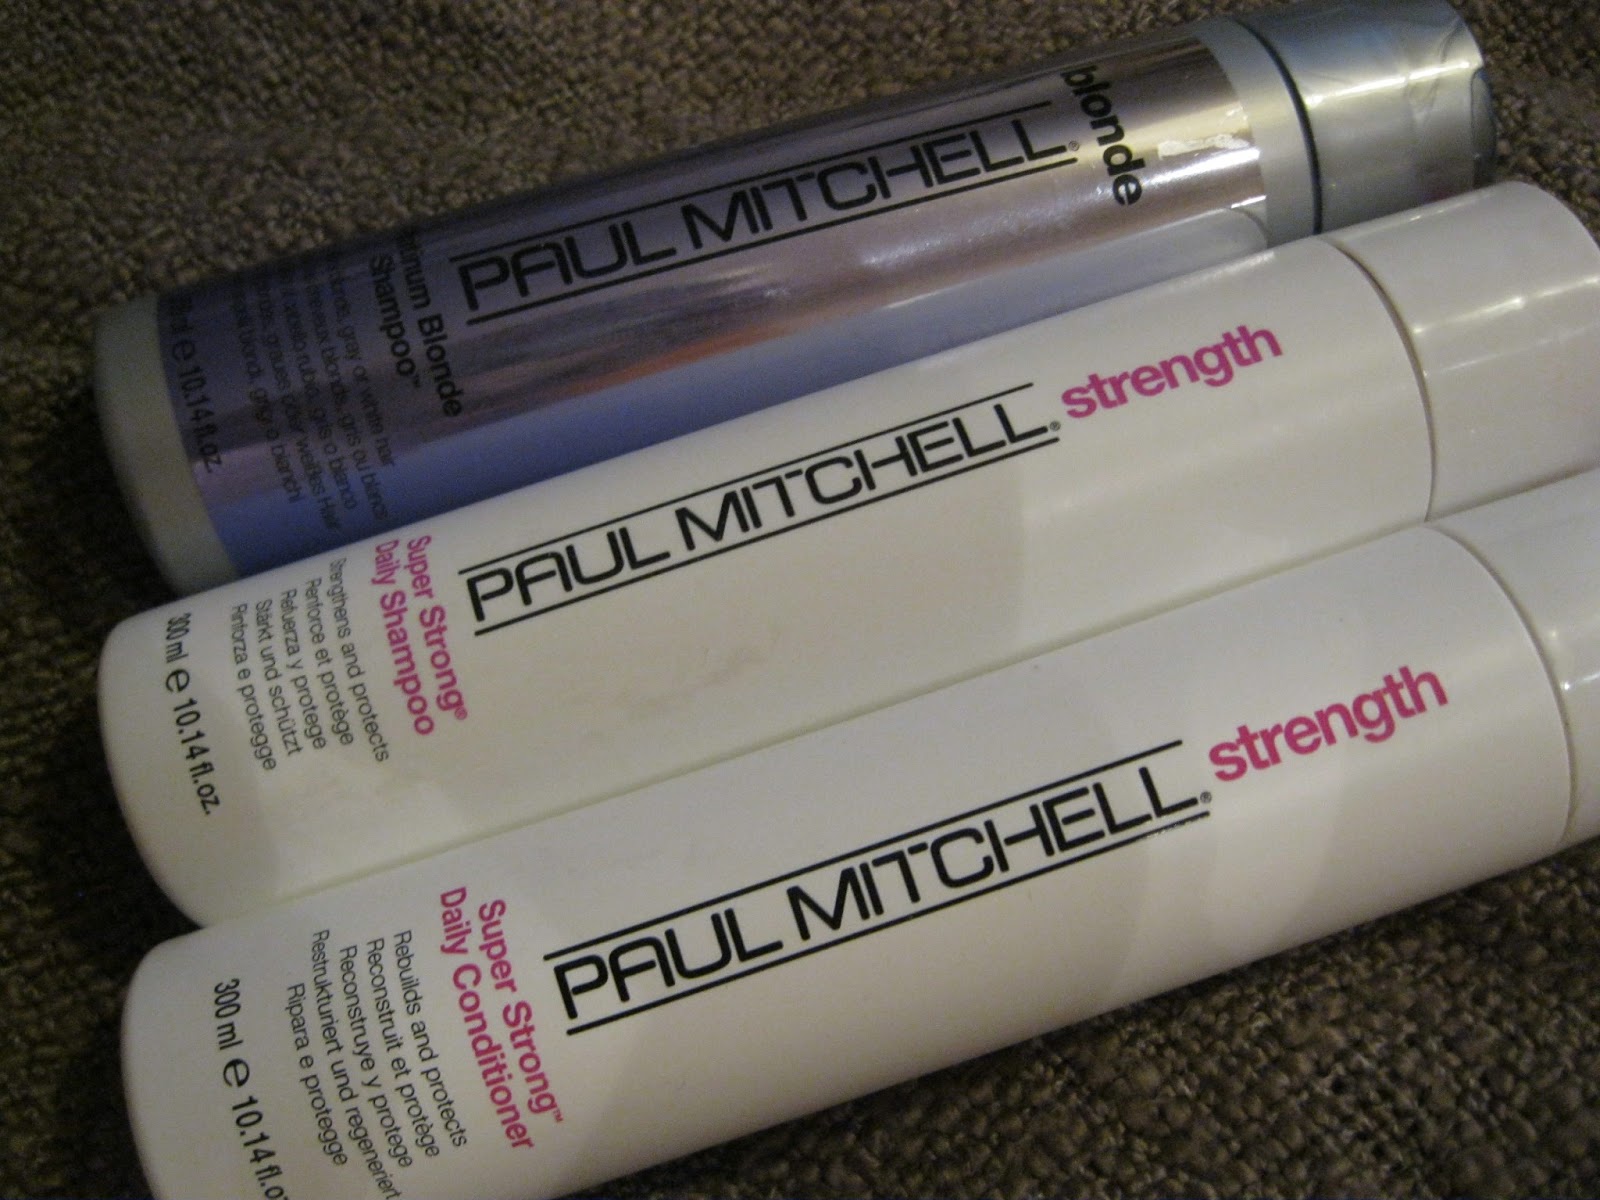 7. Paul Mitchell Platinum Blonde Shampoo - wide 8